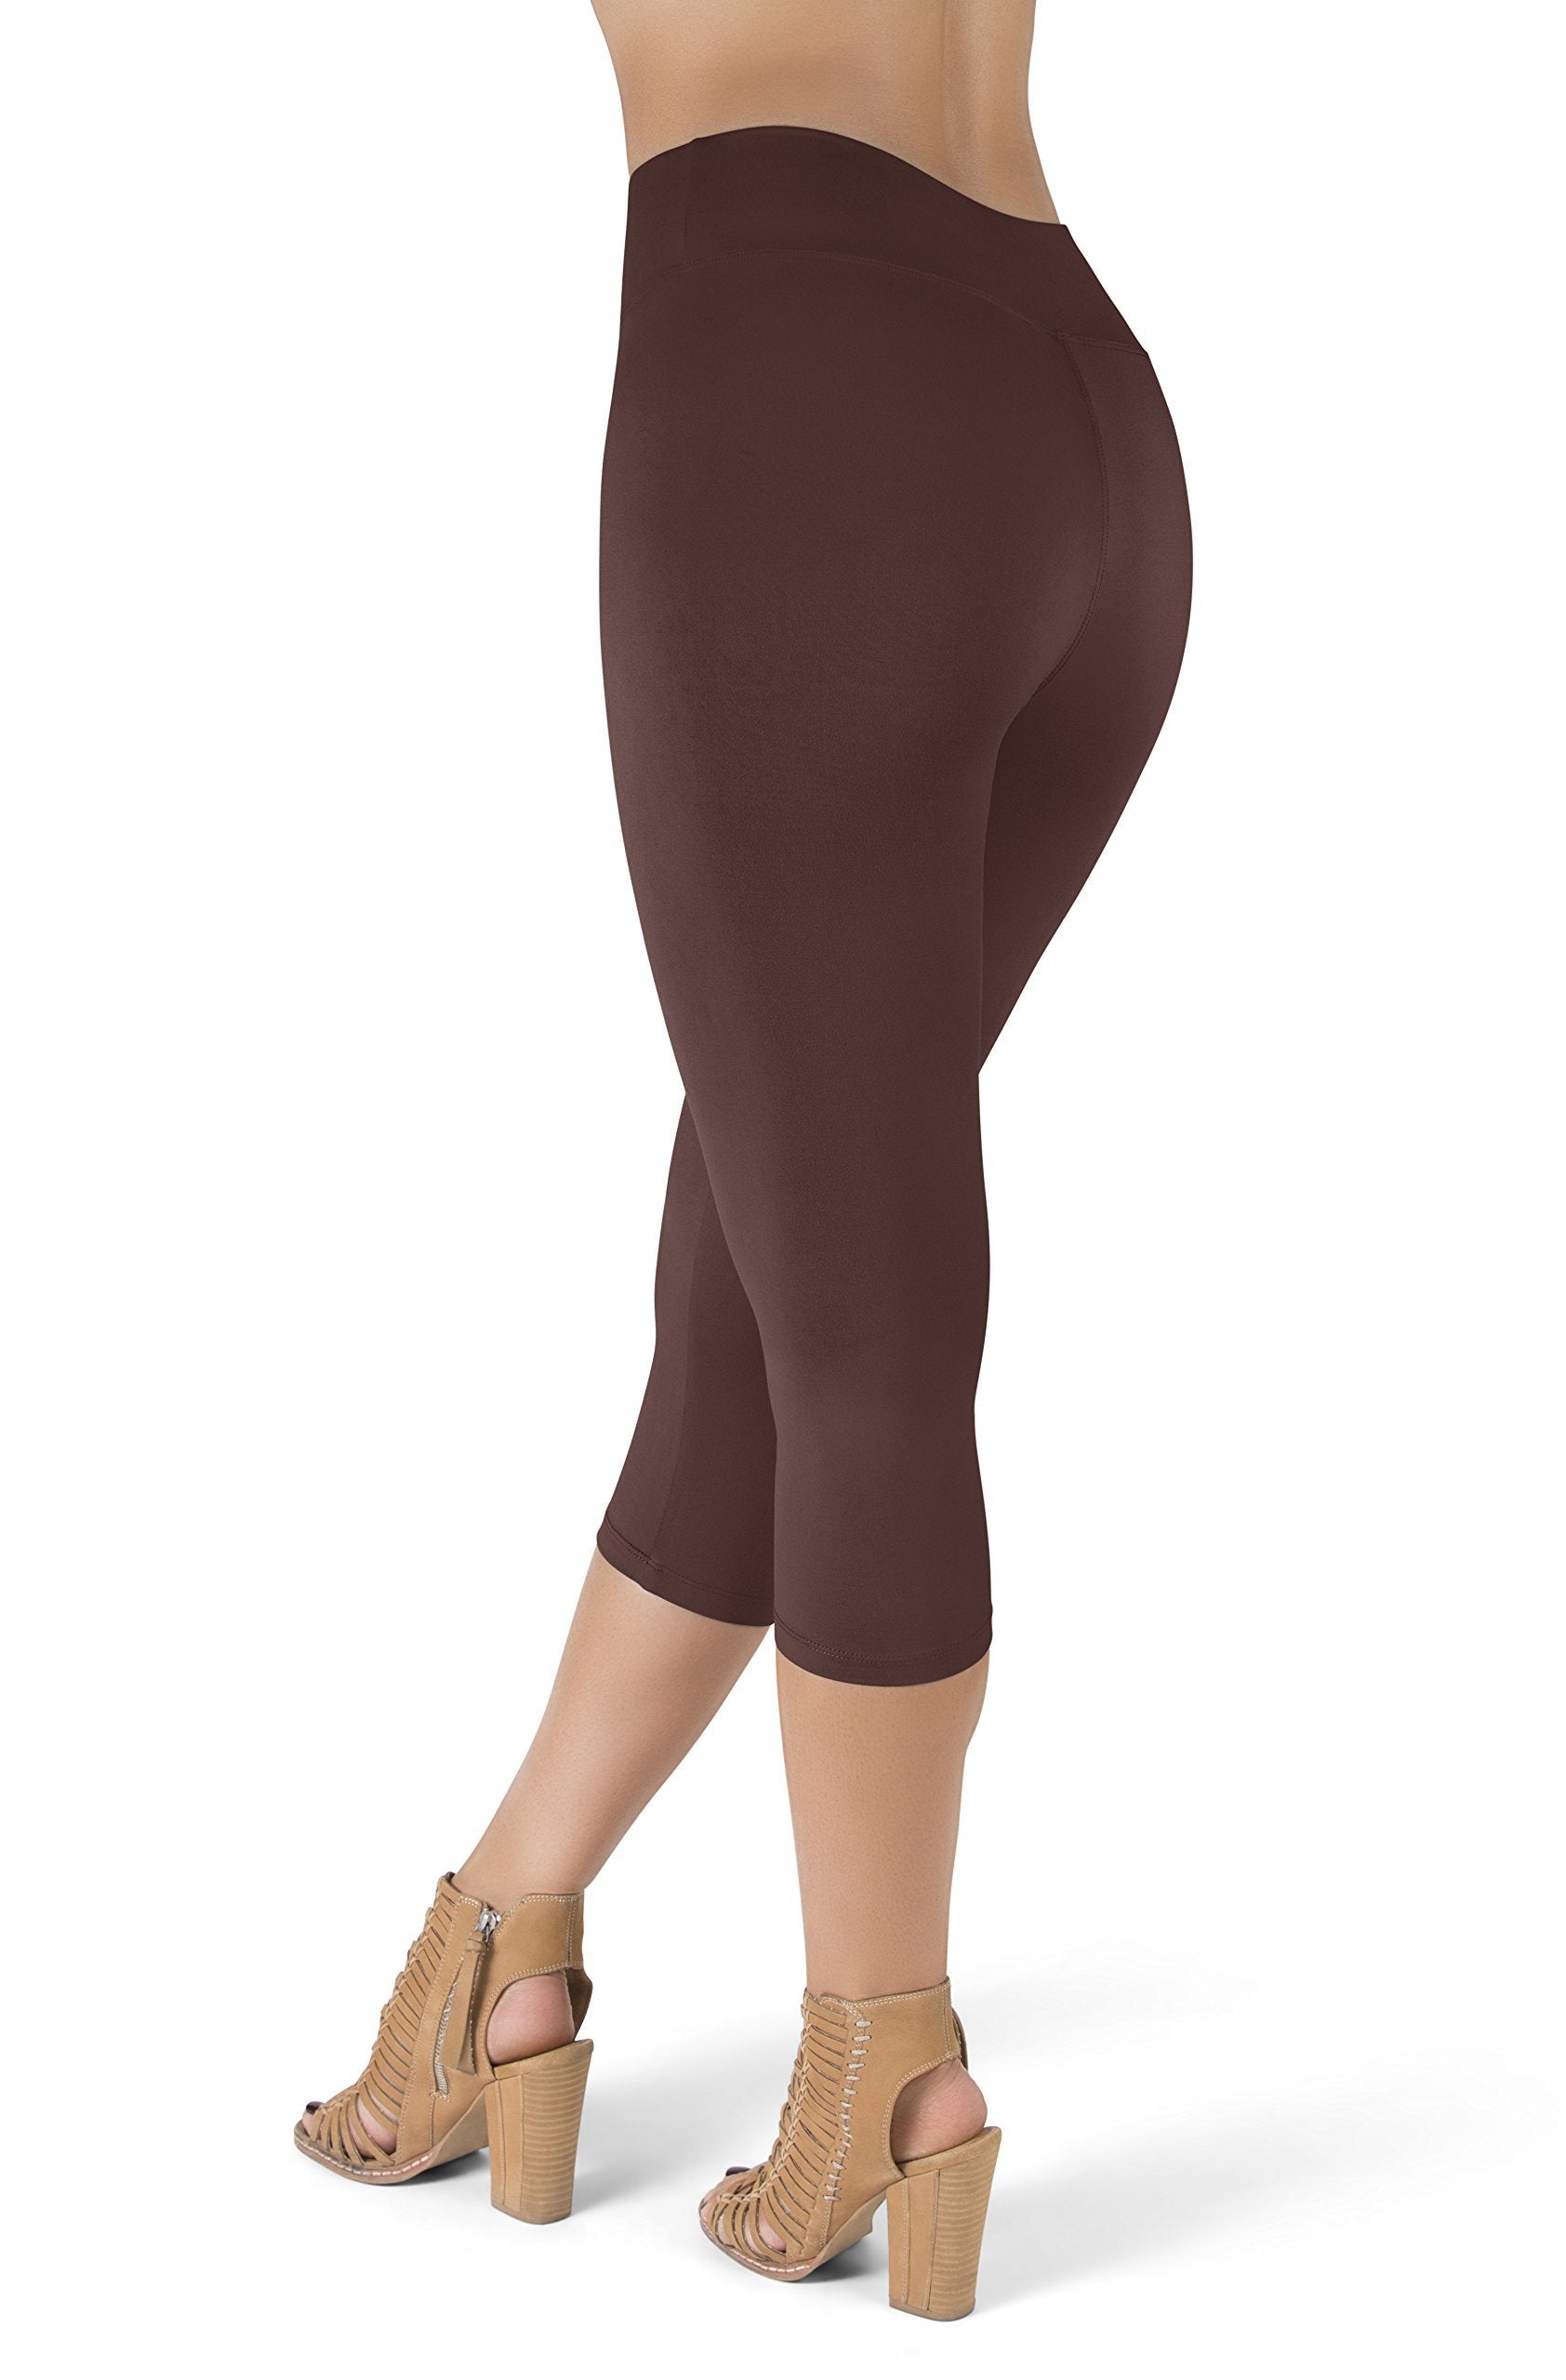 SATINA High Waisted Capri Leggings for Women - Capri Leggings for Women - High Waist for Tummy Control - Brown Capri Leggings for |3 Inch Waistband (Plus Size, Brown)